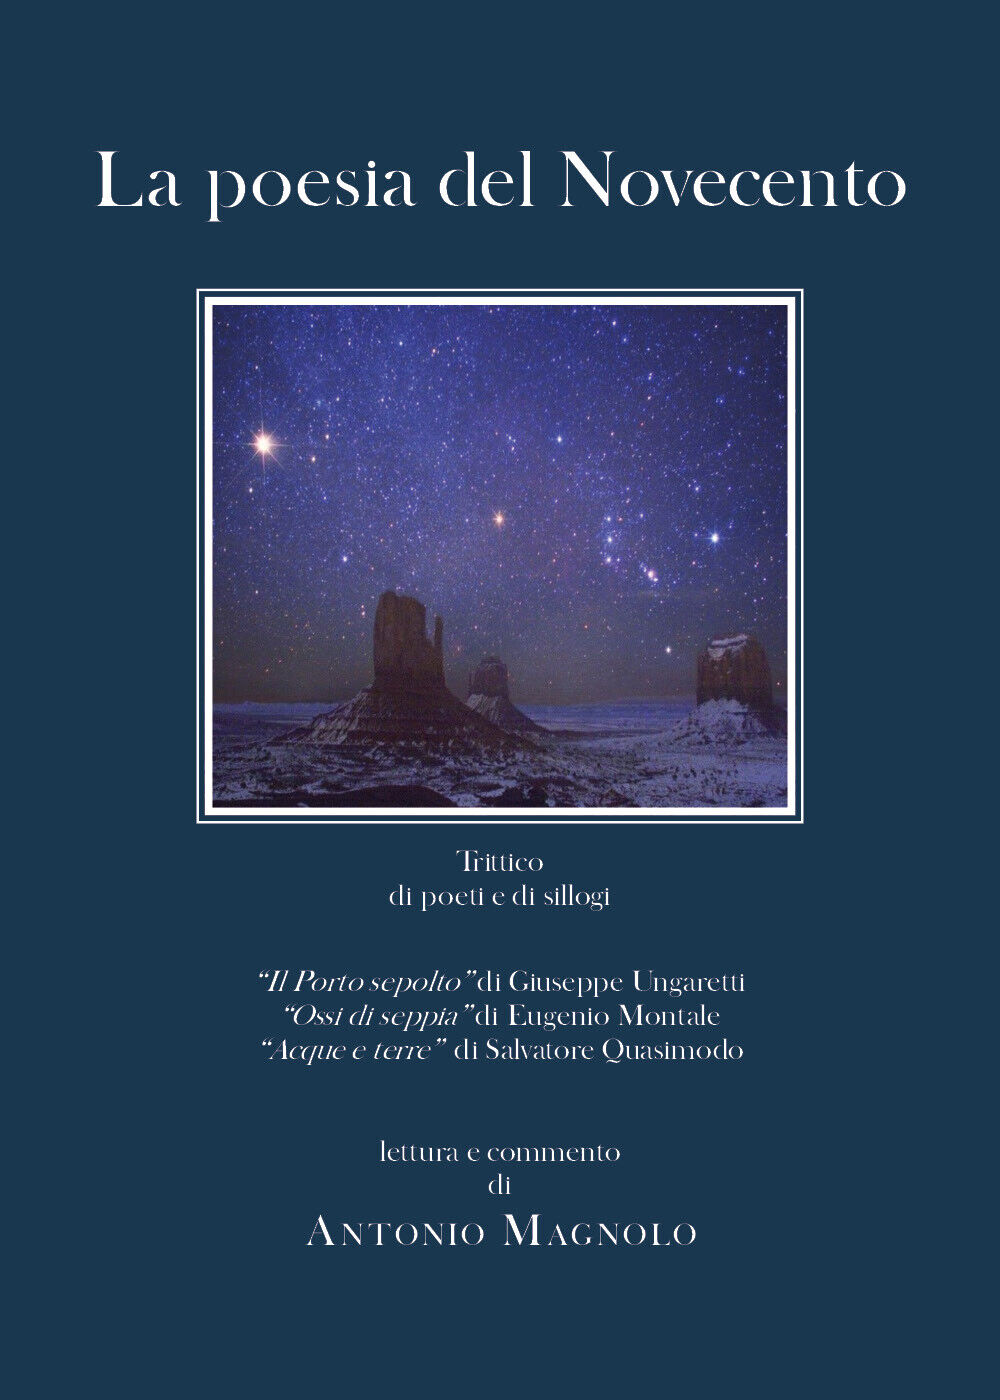 La poesia del Novecento di Antonio Magnolo,  2020,  Youcanprint